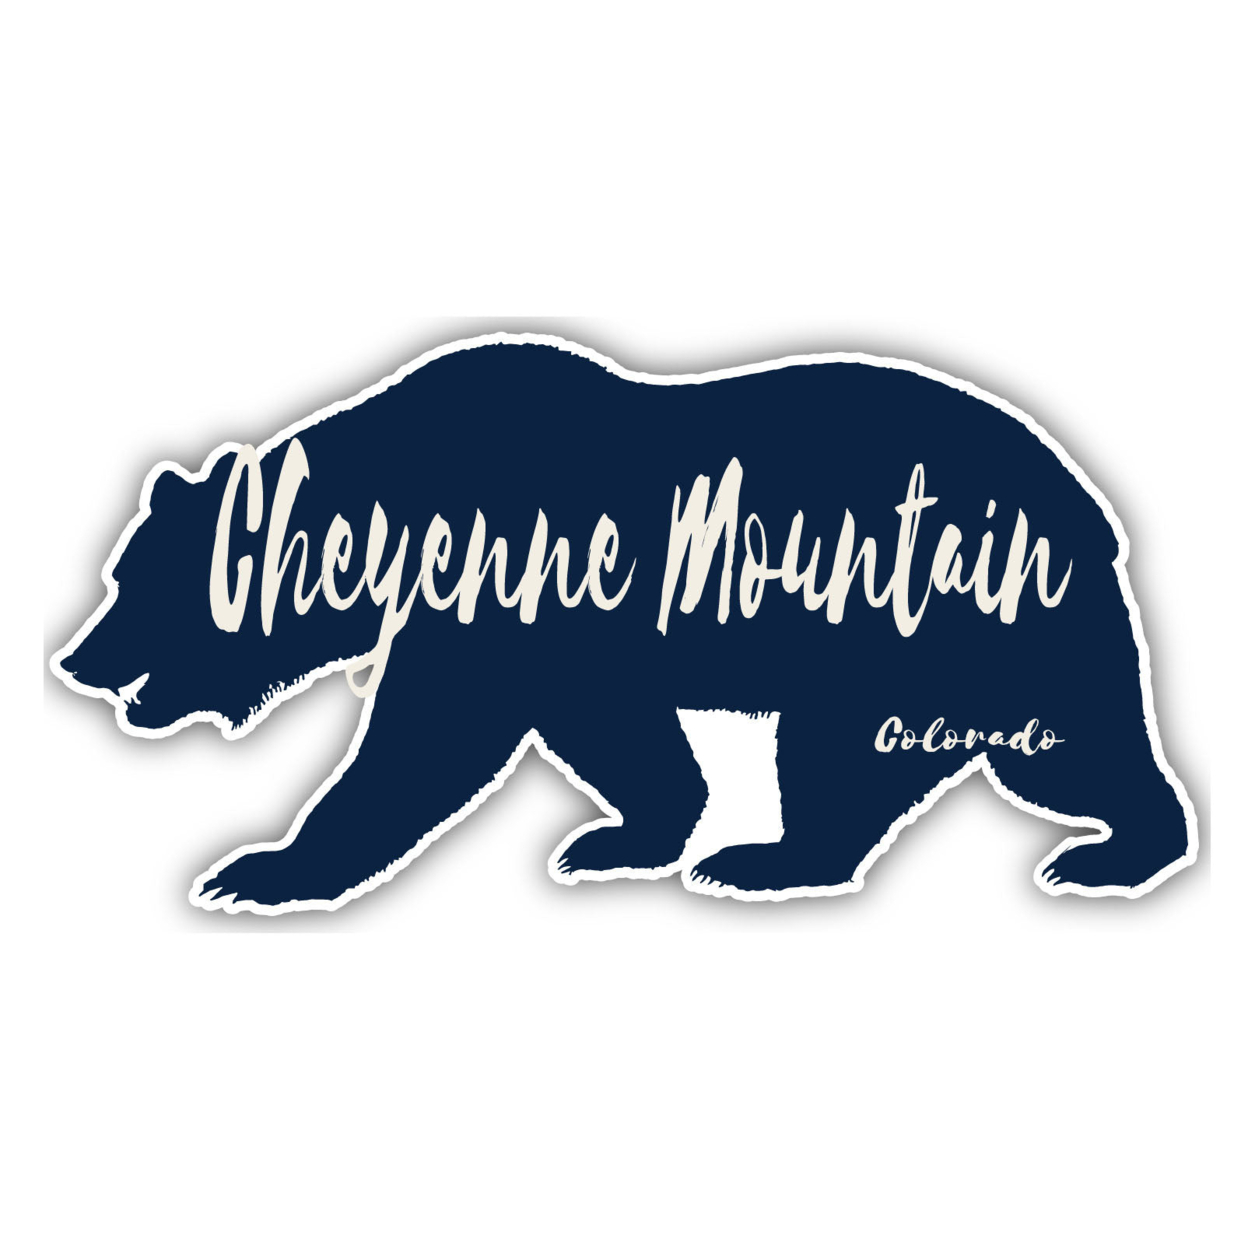 Cheyenne Mountain Colorado Souvenir Decorative Stickers (Choose Theme And Size) - Single Unit, 6-Inch, Bear